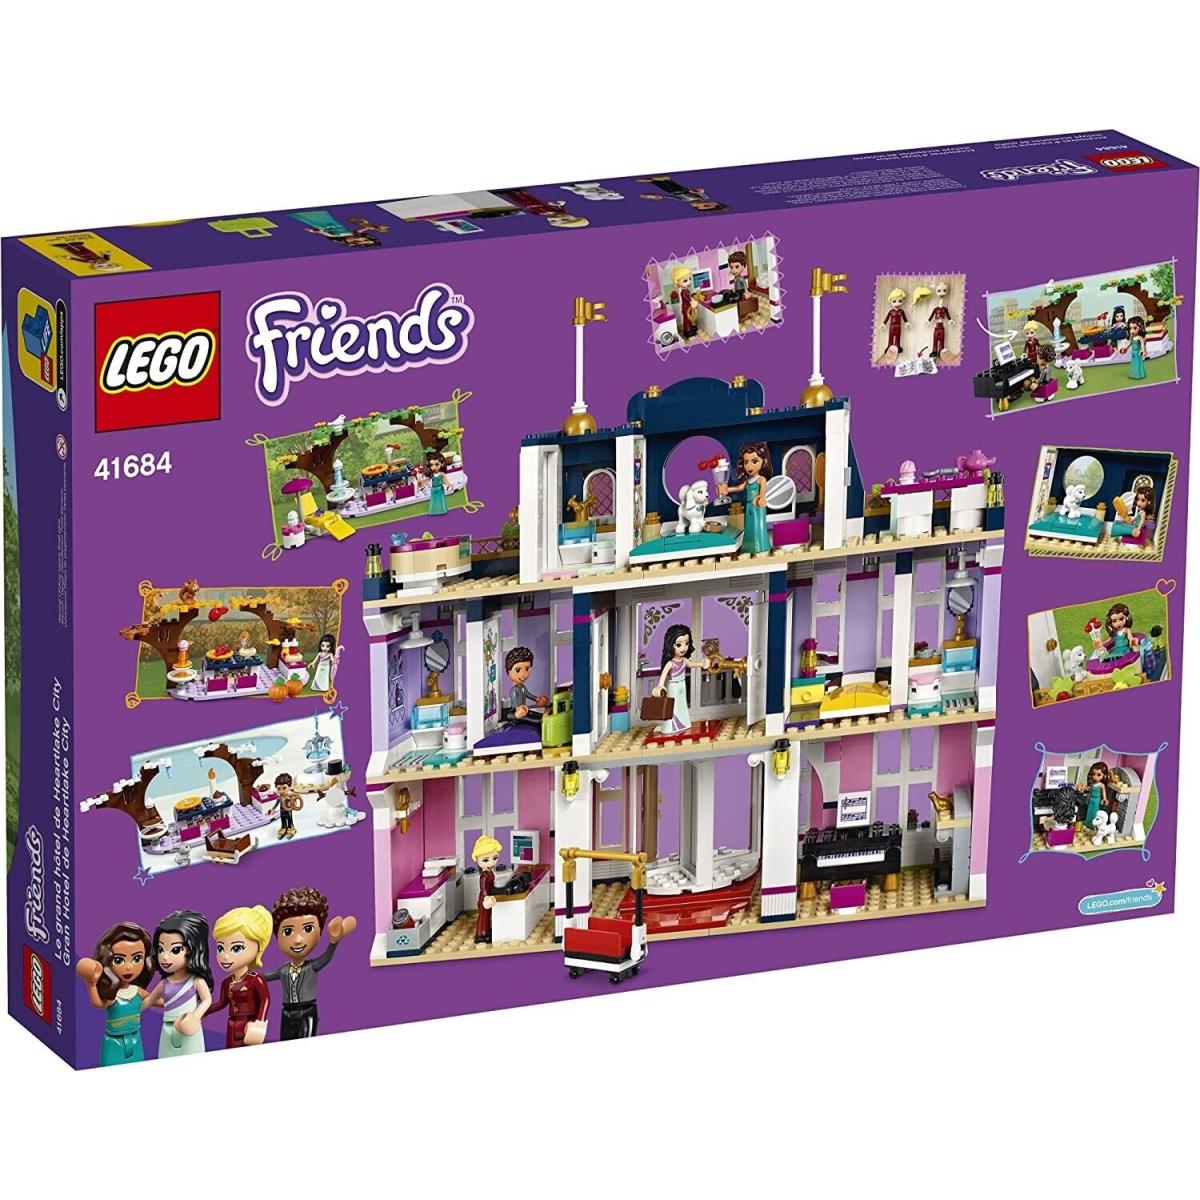 Lego Friends 41684 8+ Heartlake City Grand Hotel 1308 Pieces